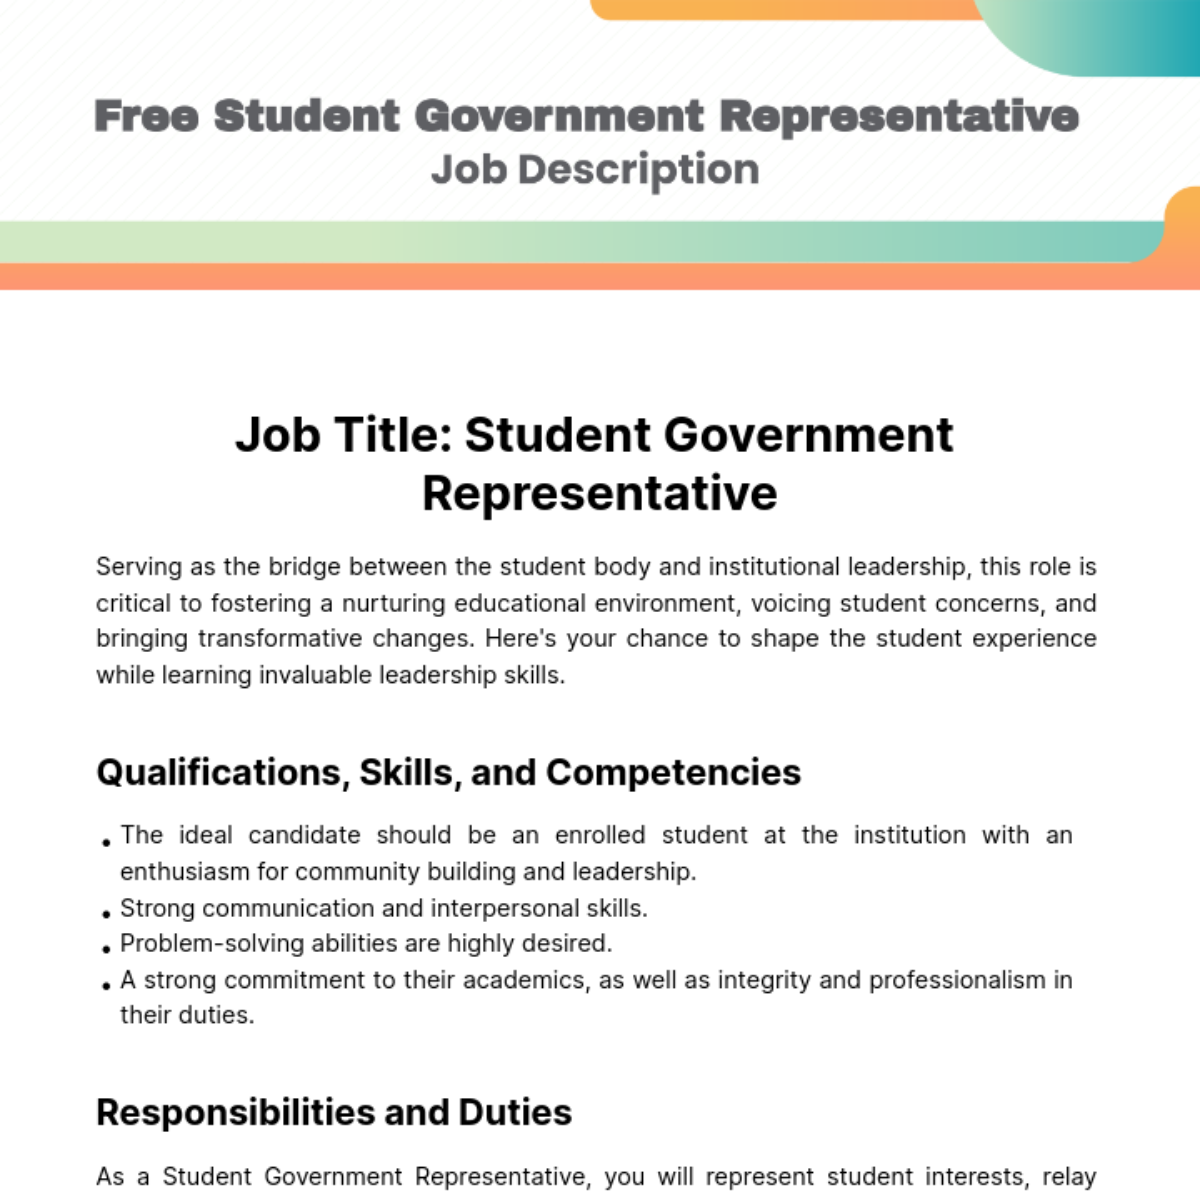 Free Student Government Job Description Template